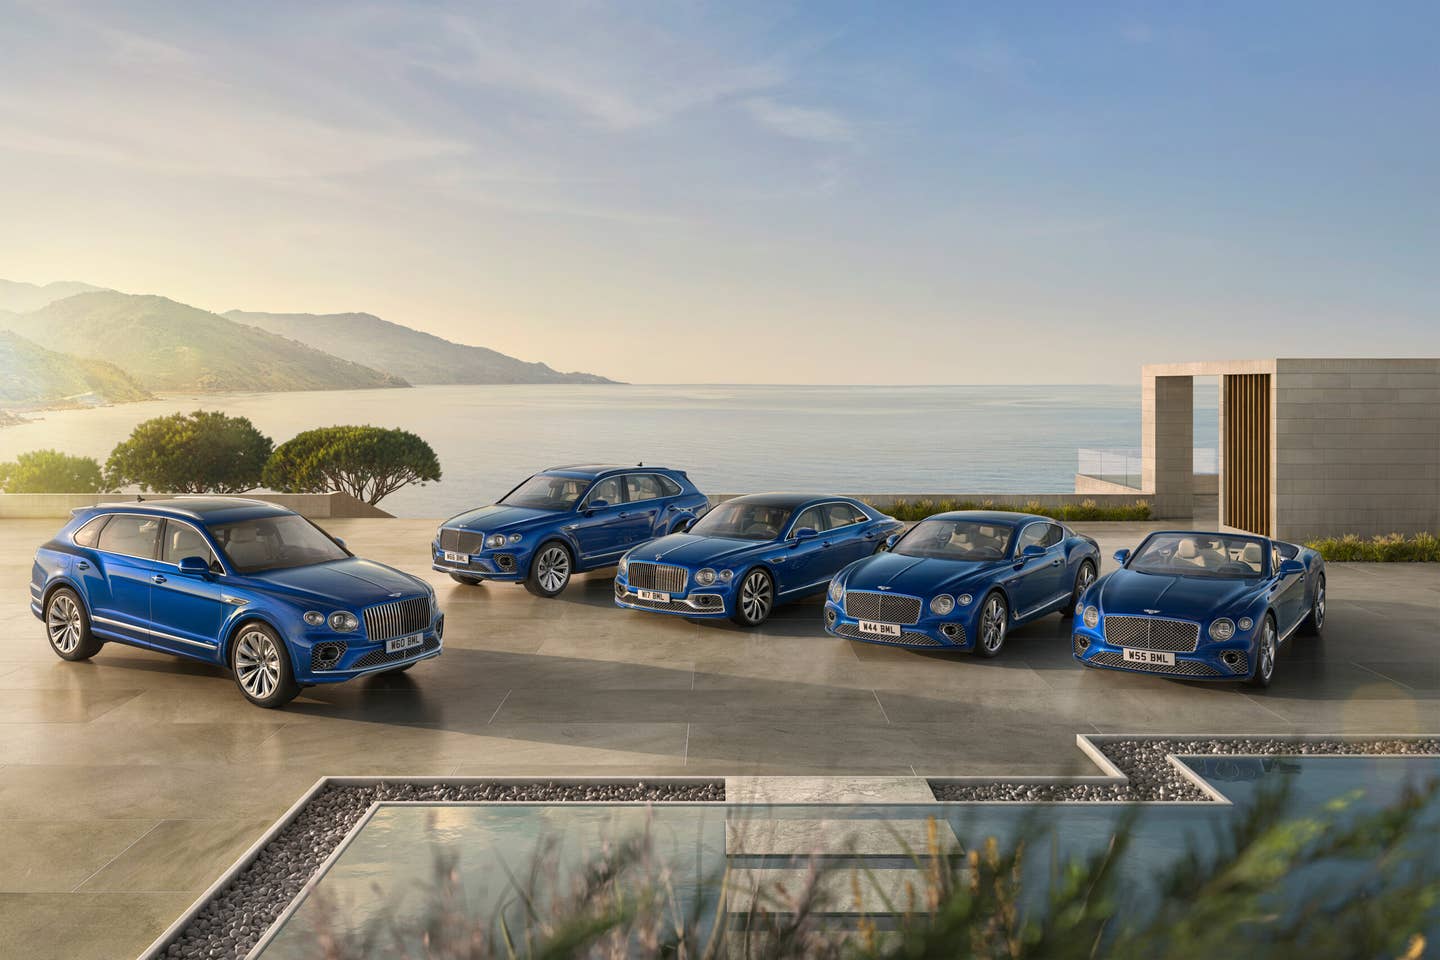 The Azure spec is available across the Bentley range.